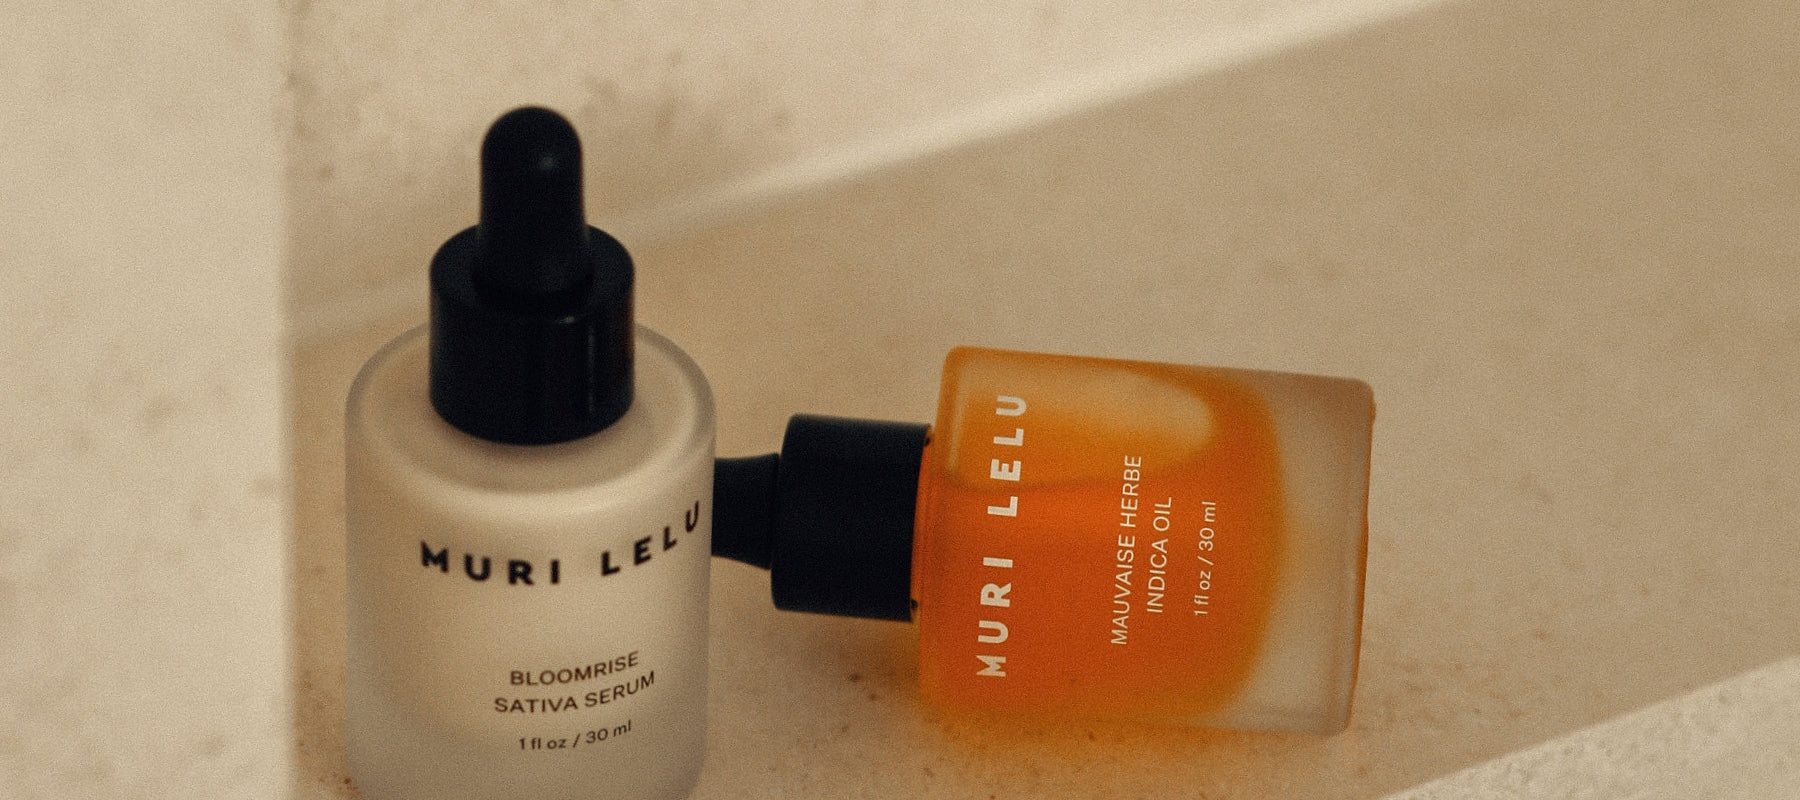 Bottles of Muri Lelu serum and face oil in the bathroom.